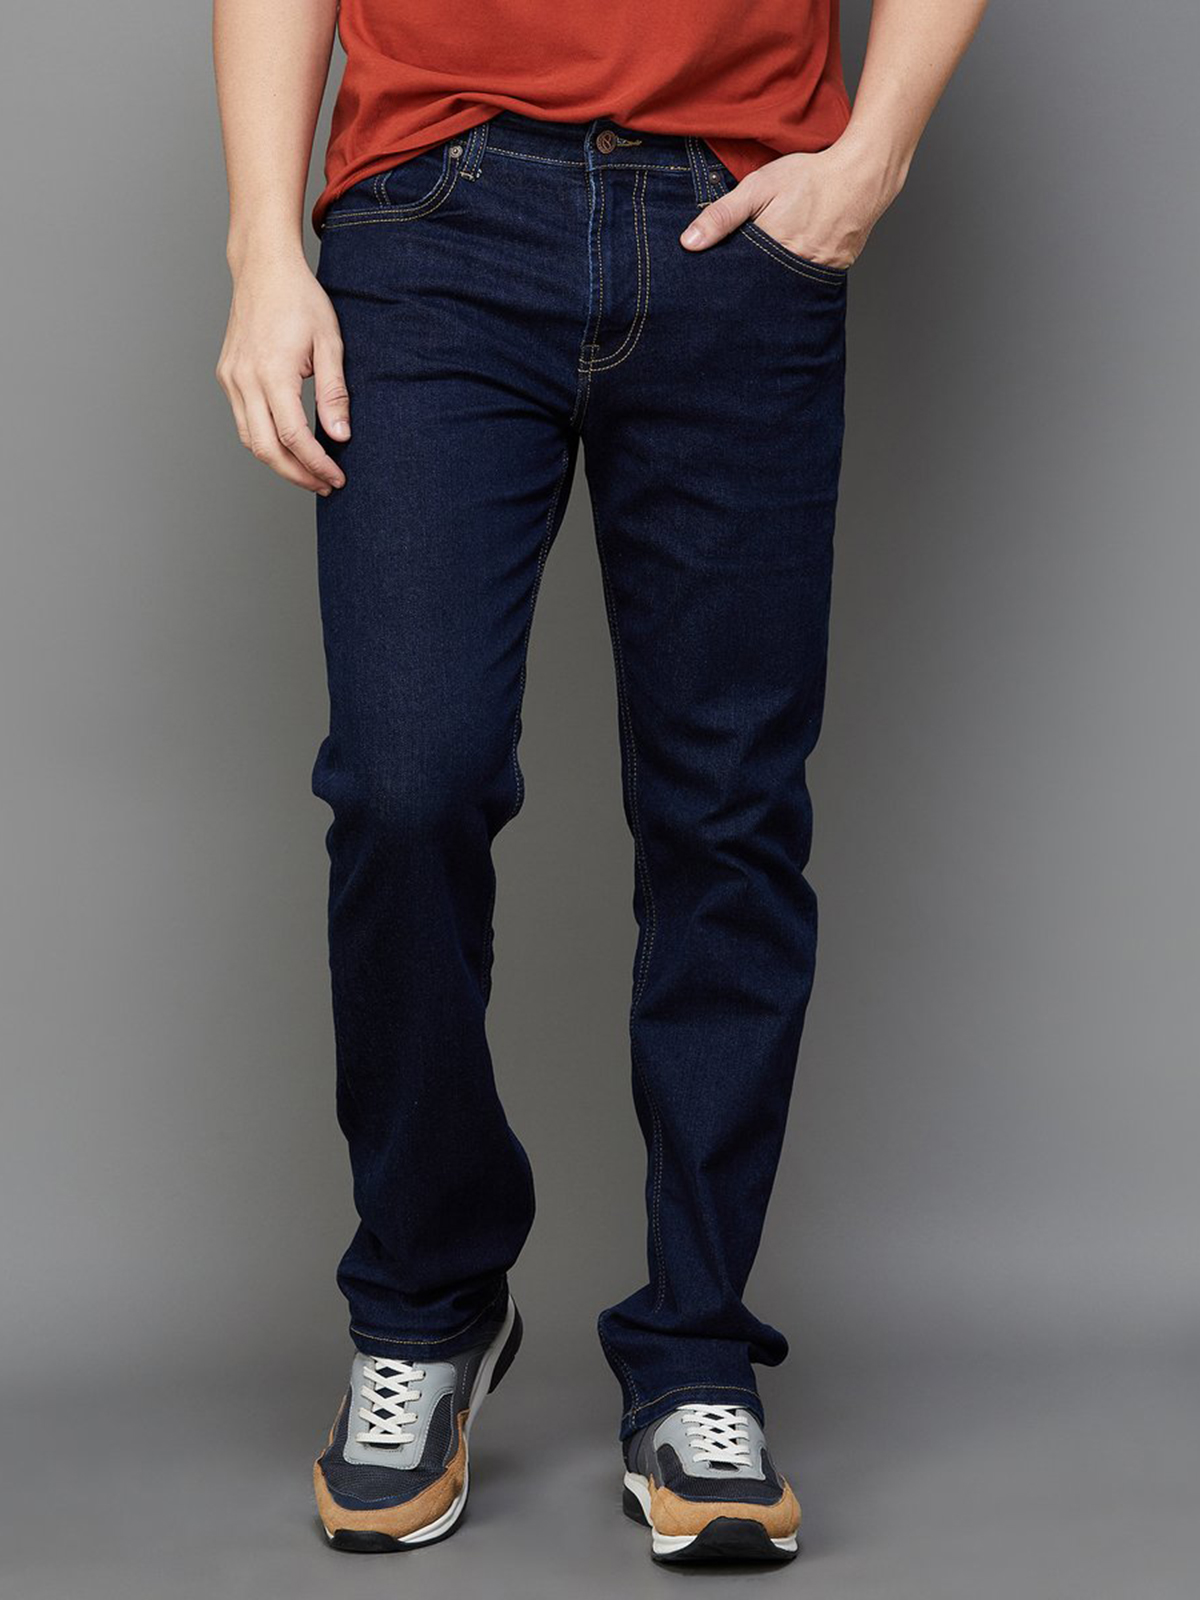 Pepe Jeans - regular solid dark navy jeans G3-MJE4337 fit